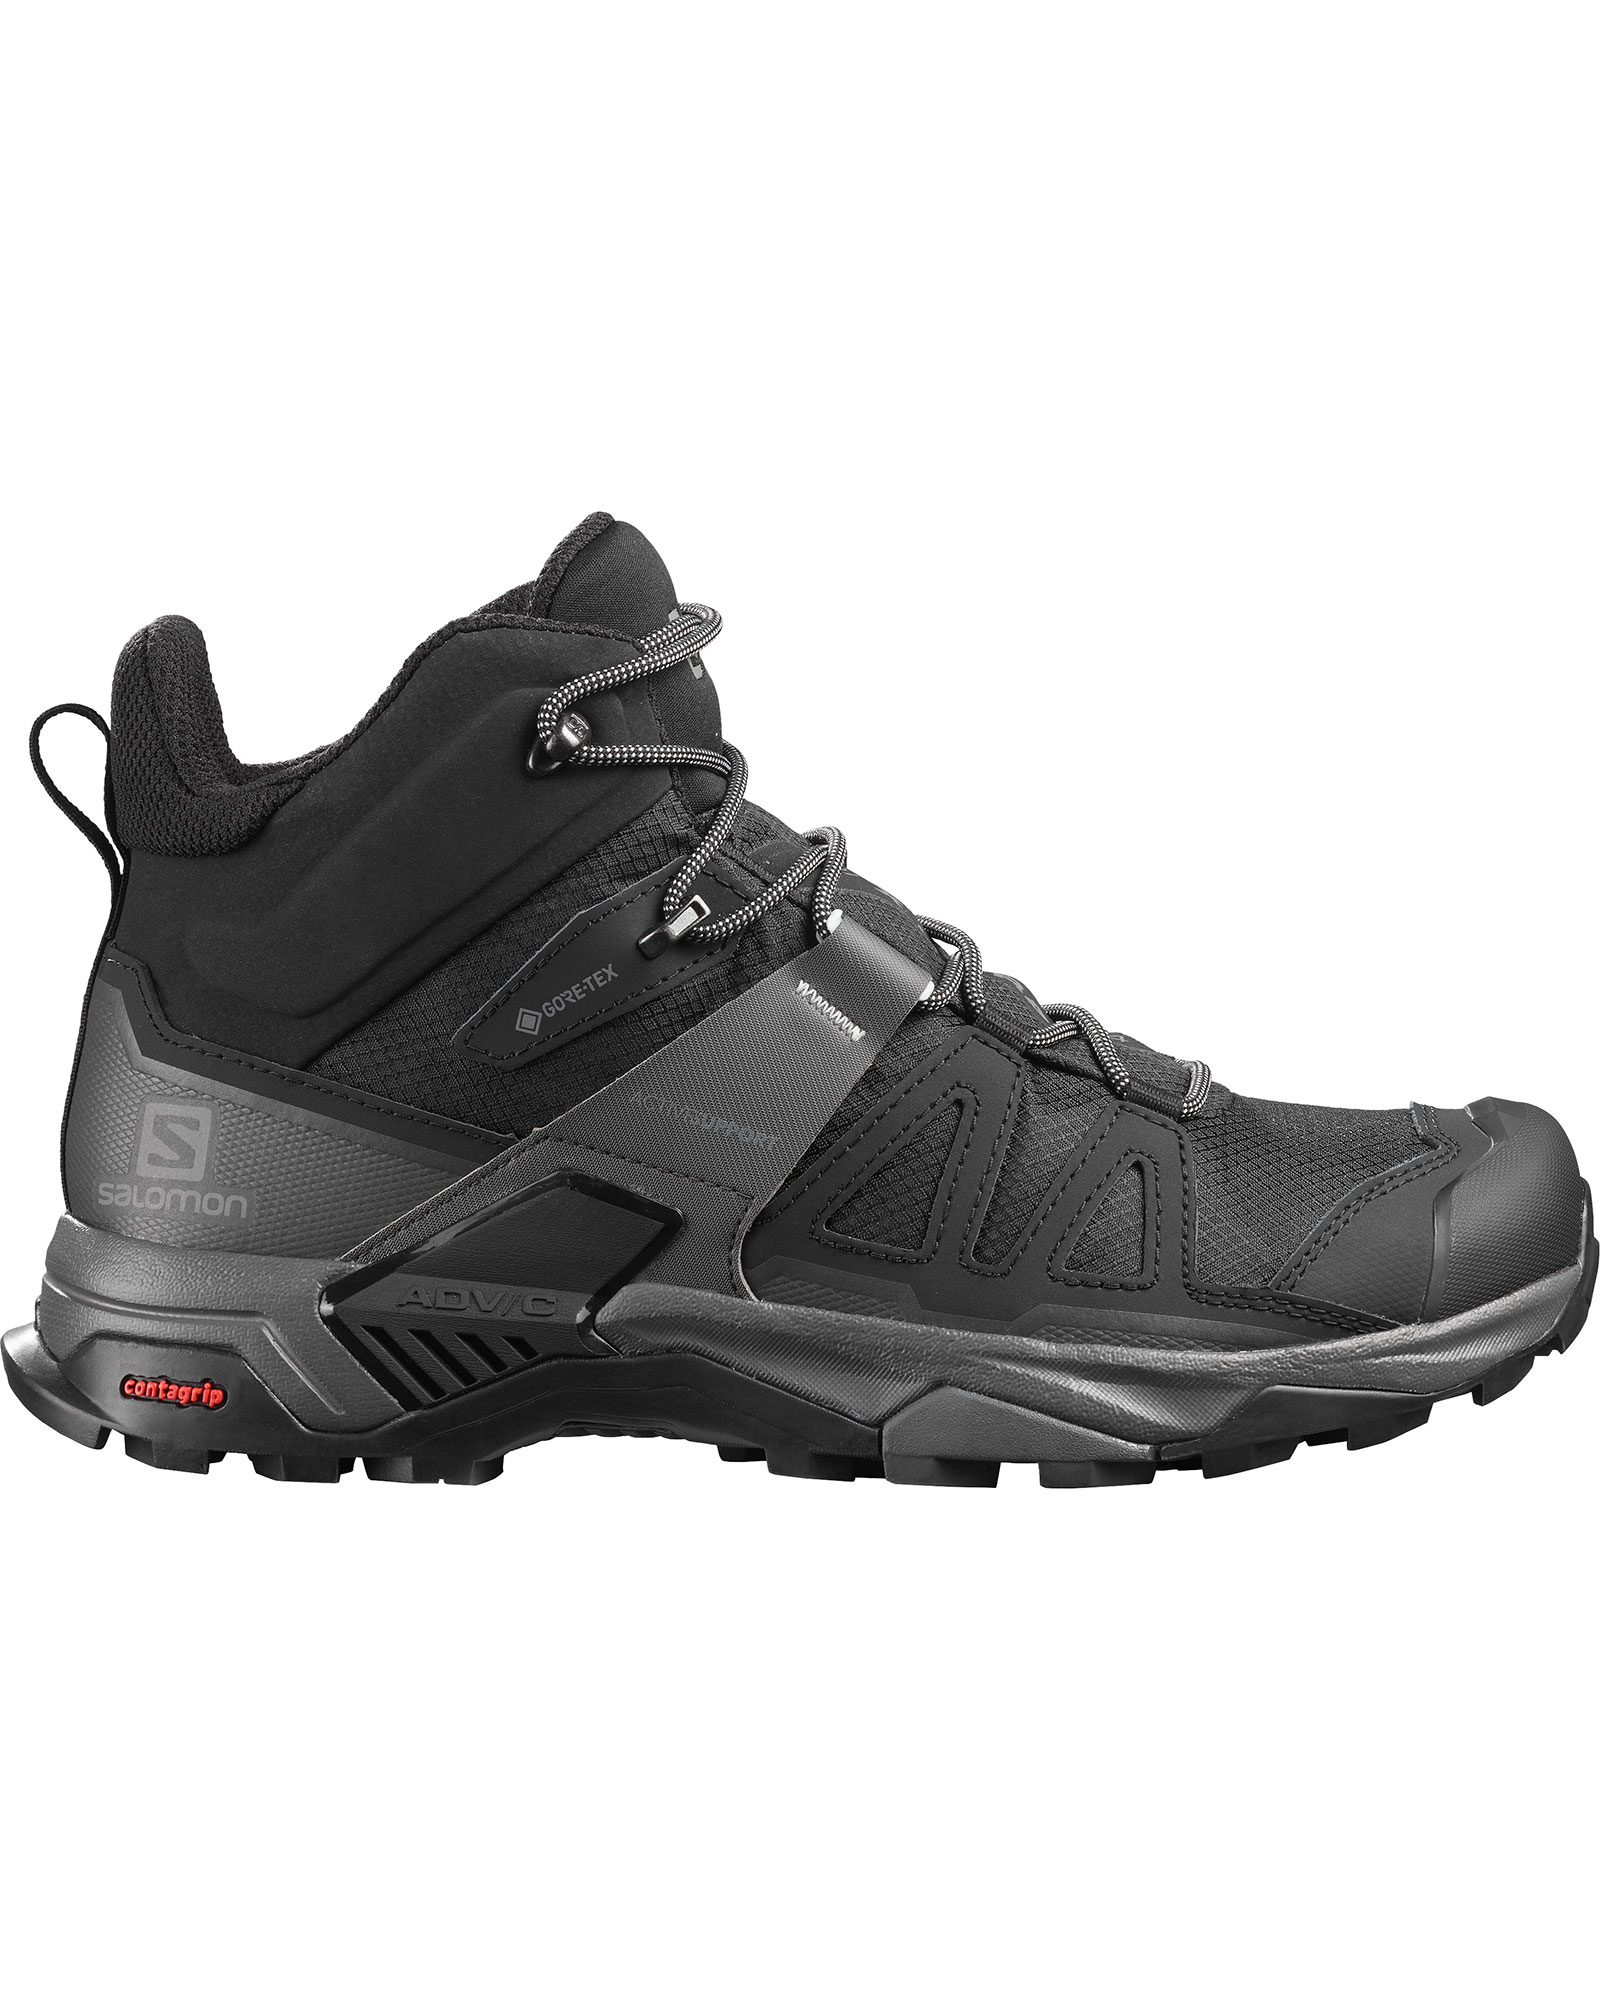 Salomon X Ultra 4 Mid GORE TEX Men’s Boots - Black/Magnet/Pearl Blue UK 9.5